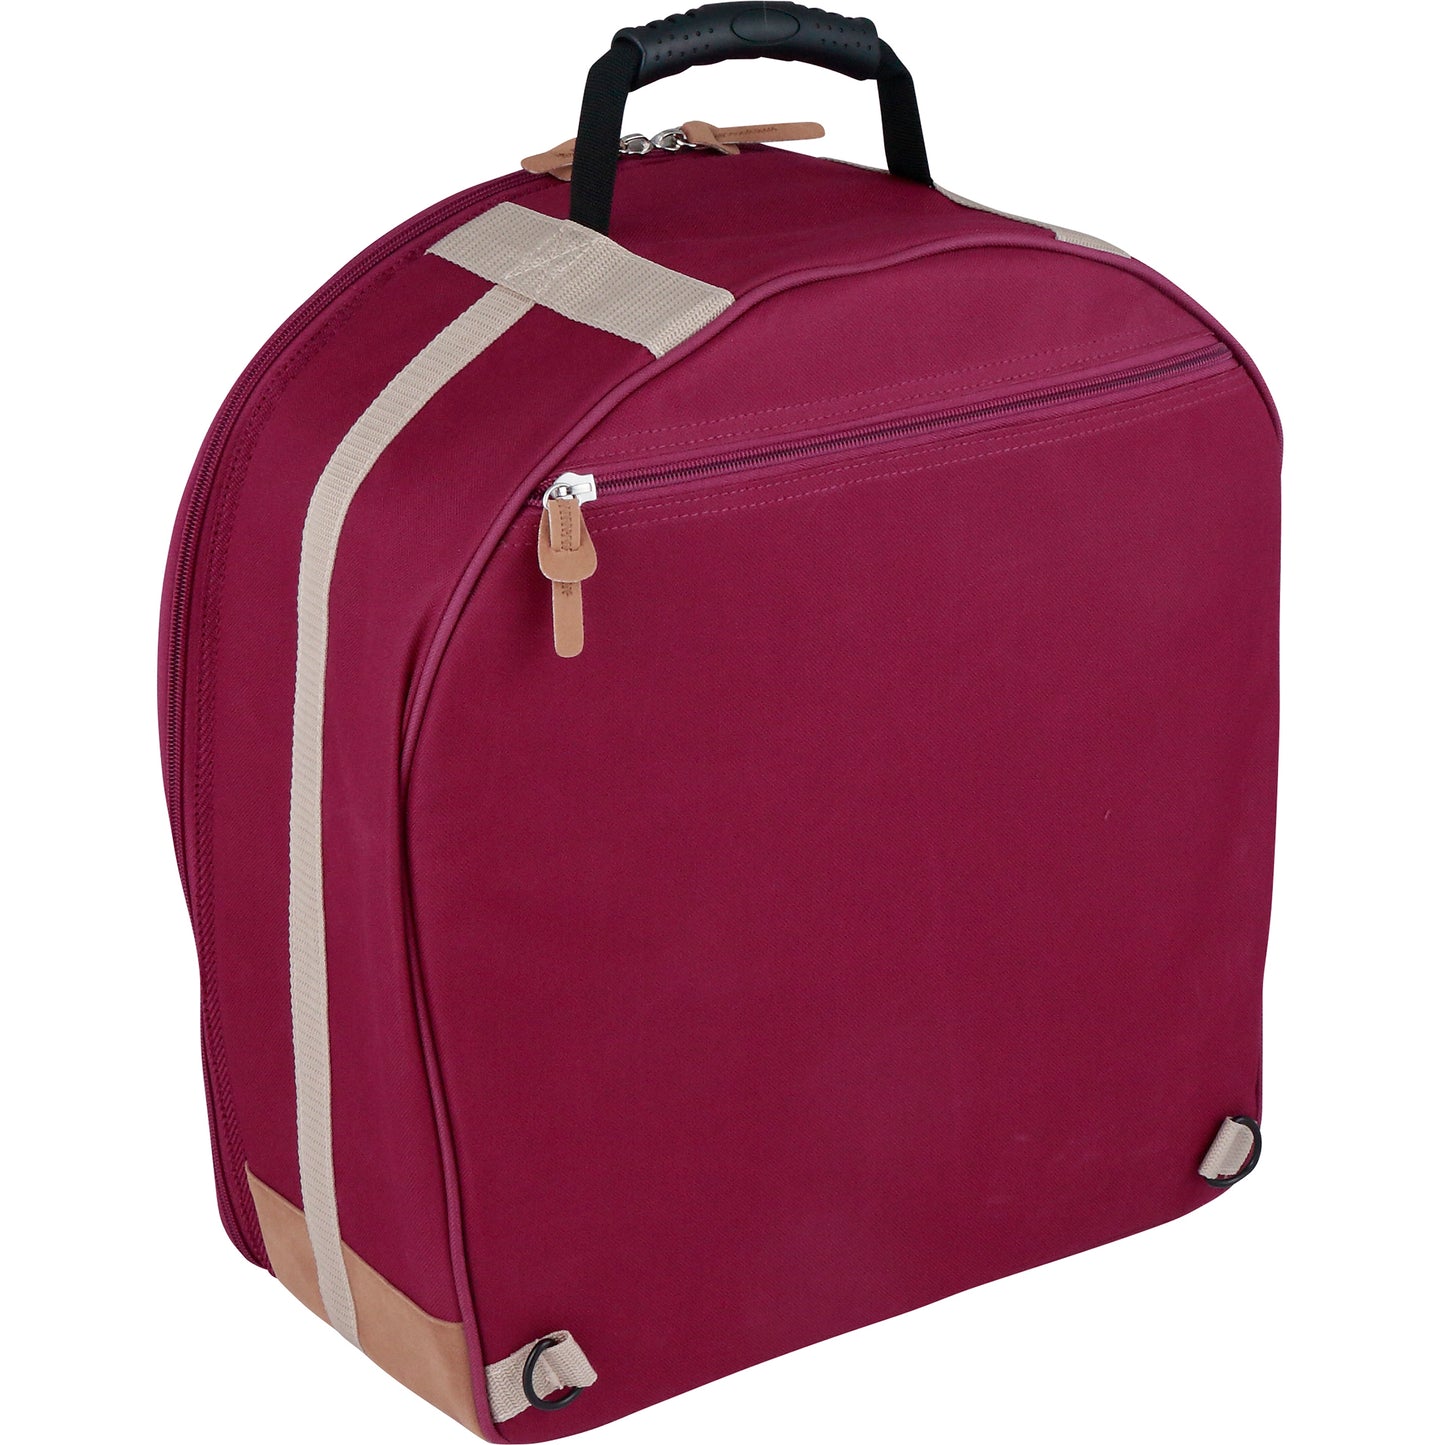 TAMA PowerPad Designer Collection Snare Drum Bag 6.5x14" Wine Red